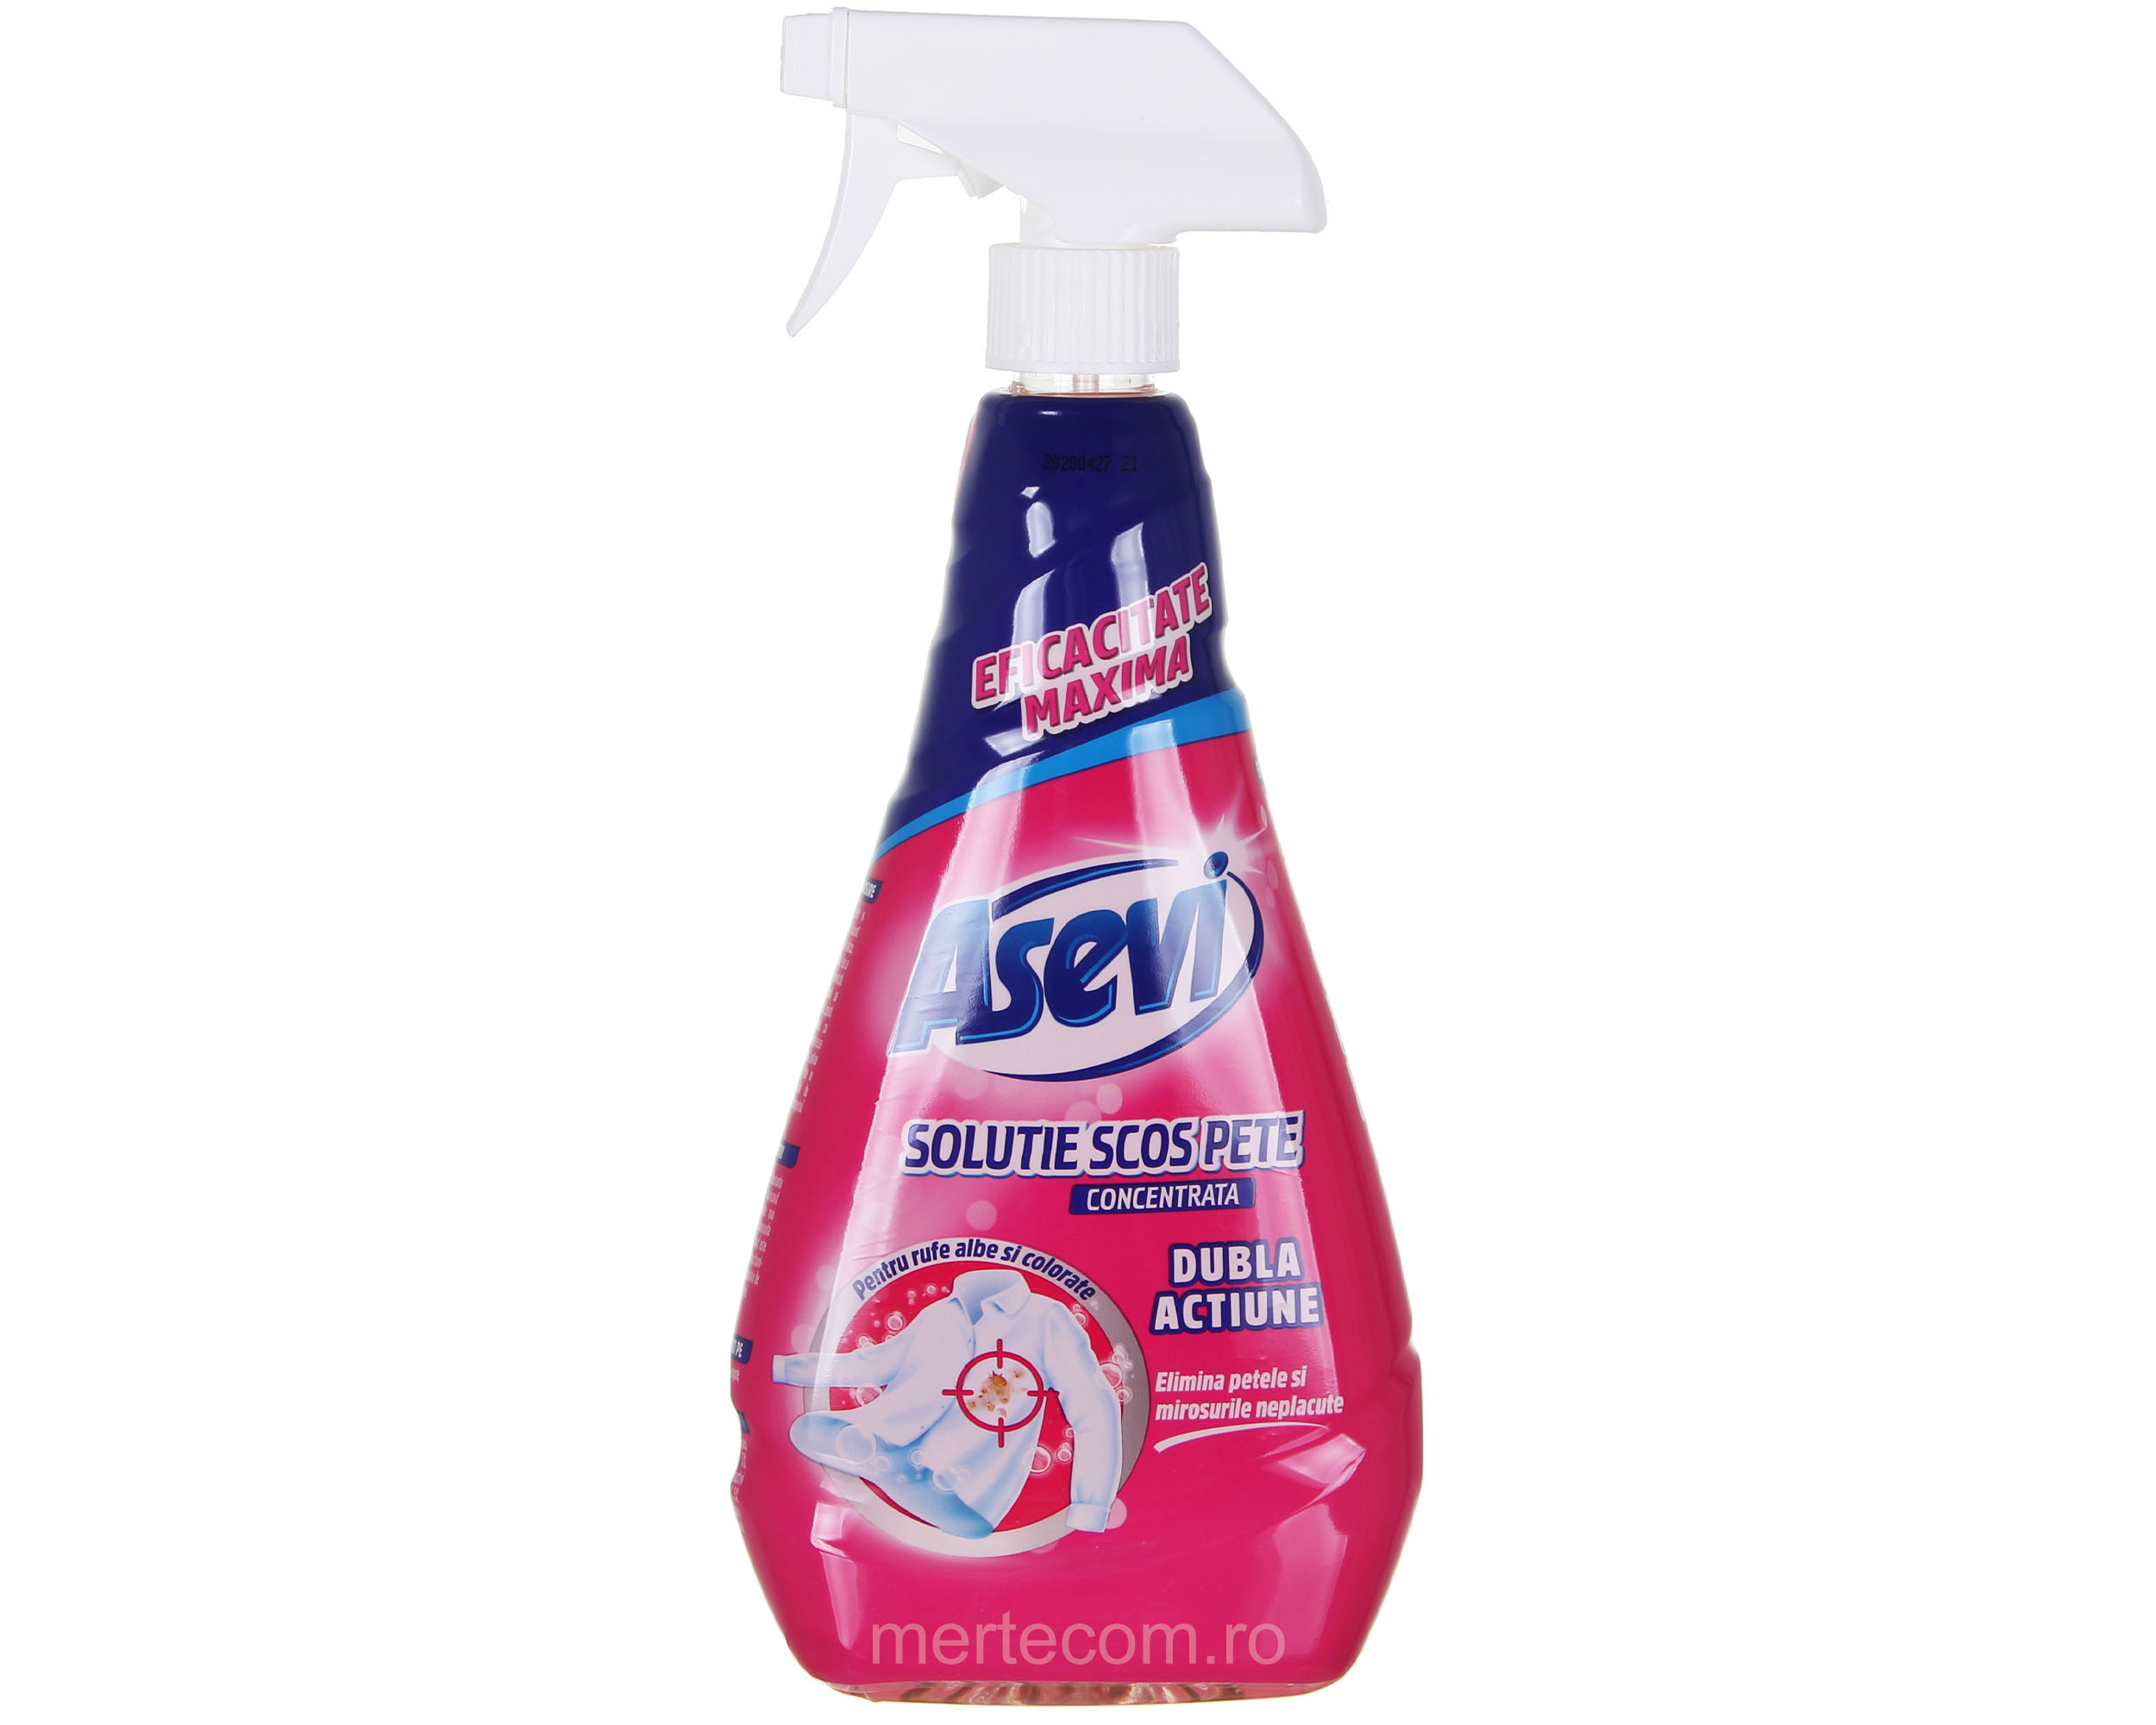 Chromatic overrun Mighty Detergent de scos pete Asevi 750 ml - Mertecom.ro